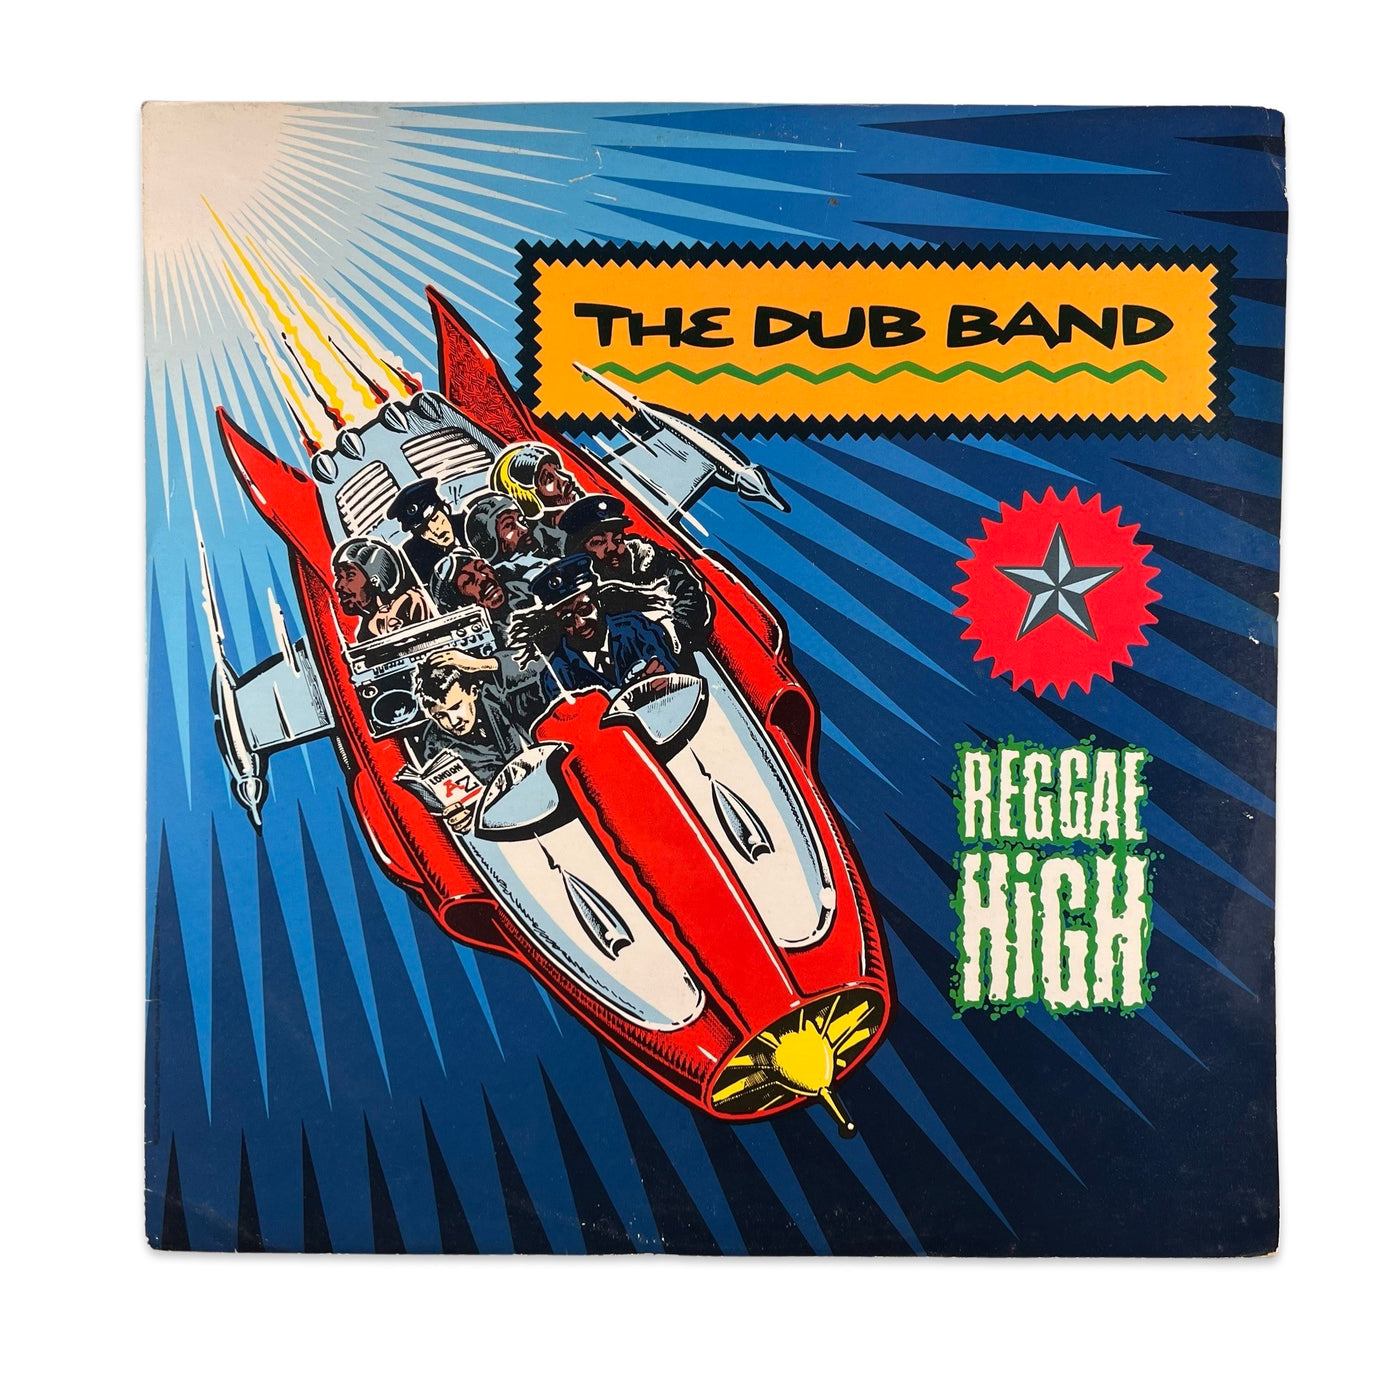 The Dub Band – Reggae High